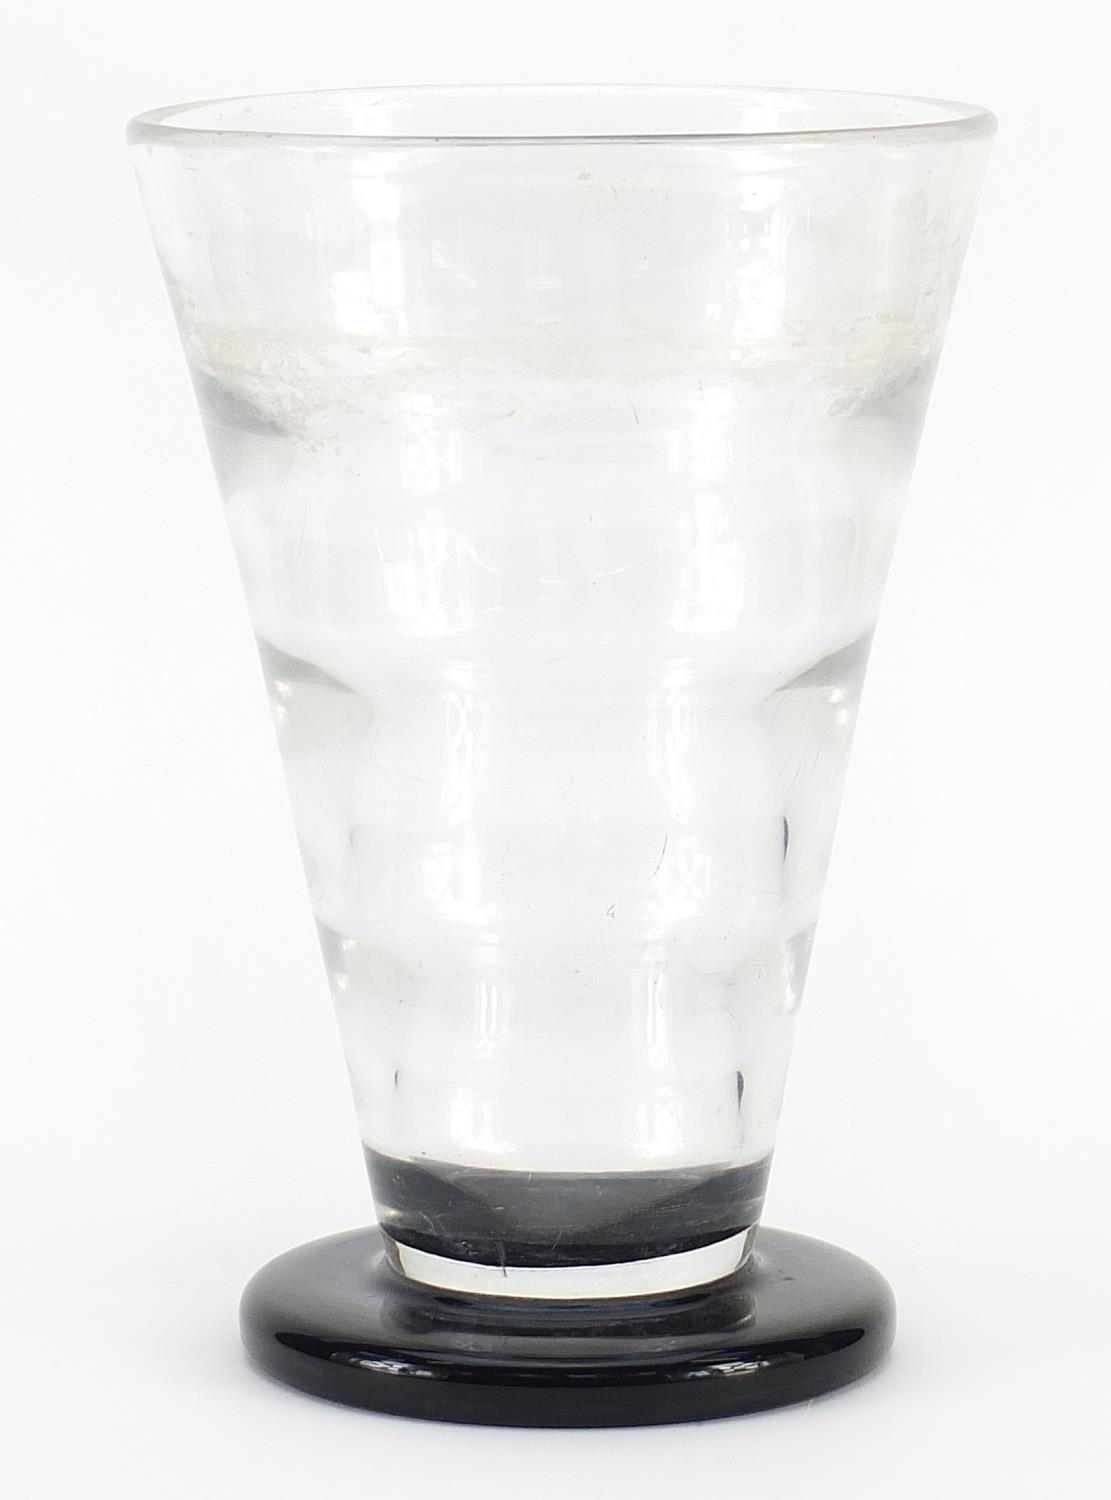 Orrefors, Scandinavian clear glass vase with black base, 22cm high